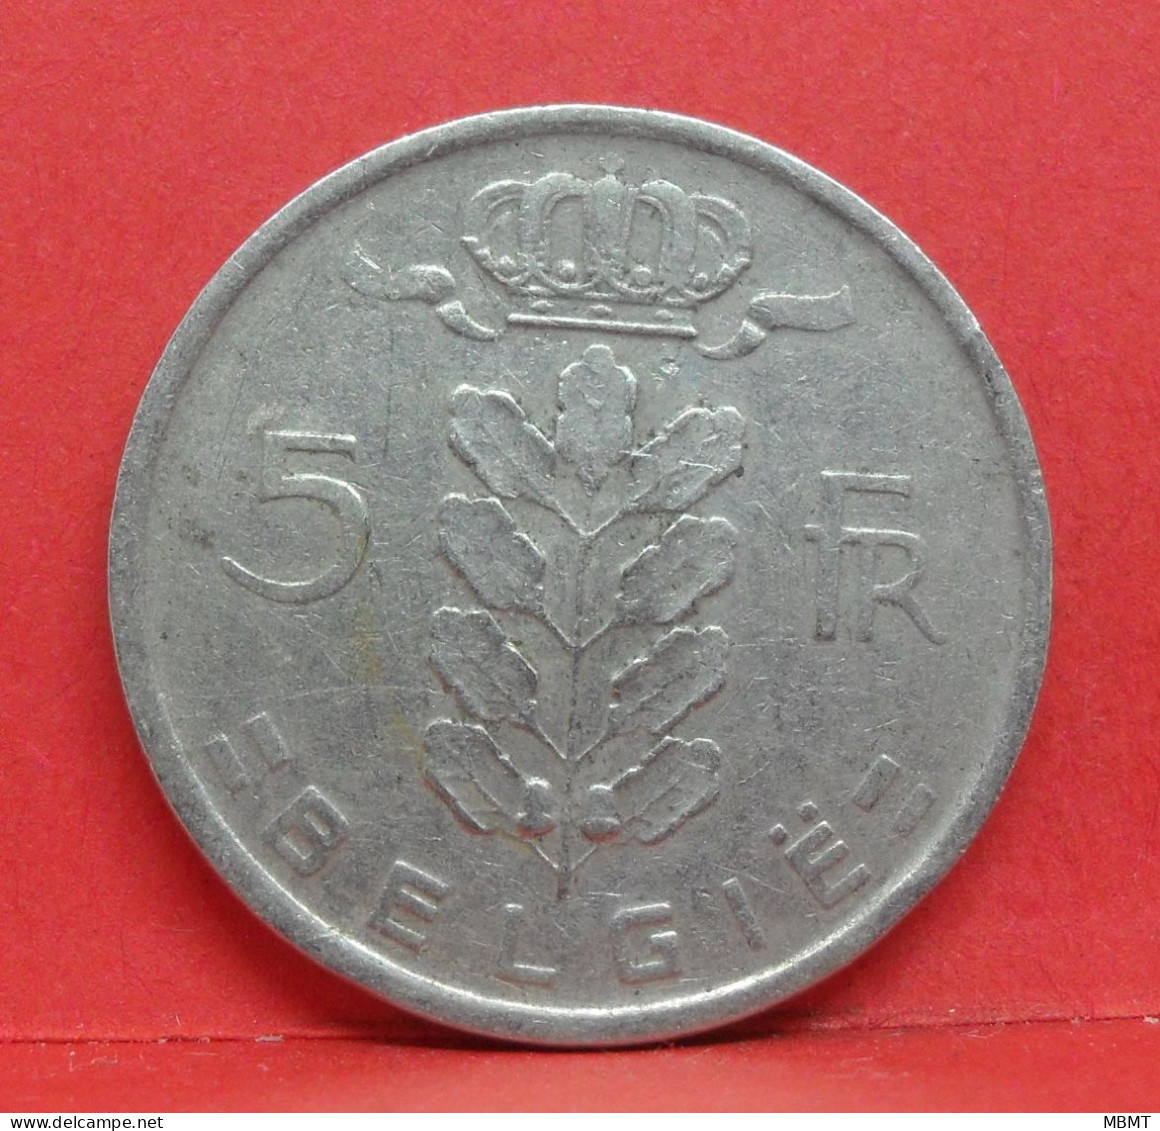 5 Frank 1948 - TB - Pièce Monnaie Belgie - Article N°1975 - 5 Franc